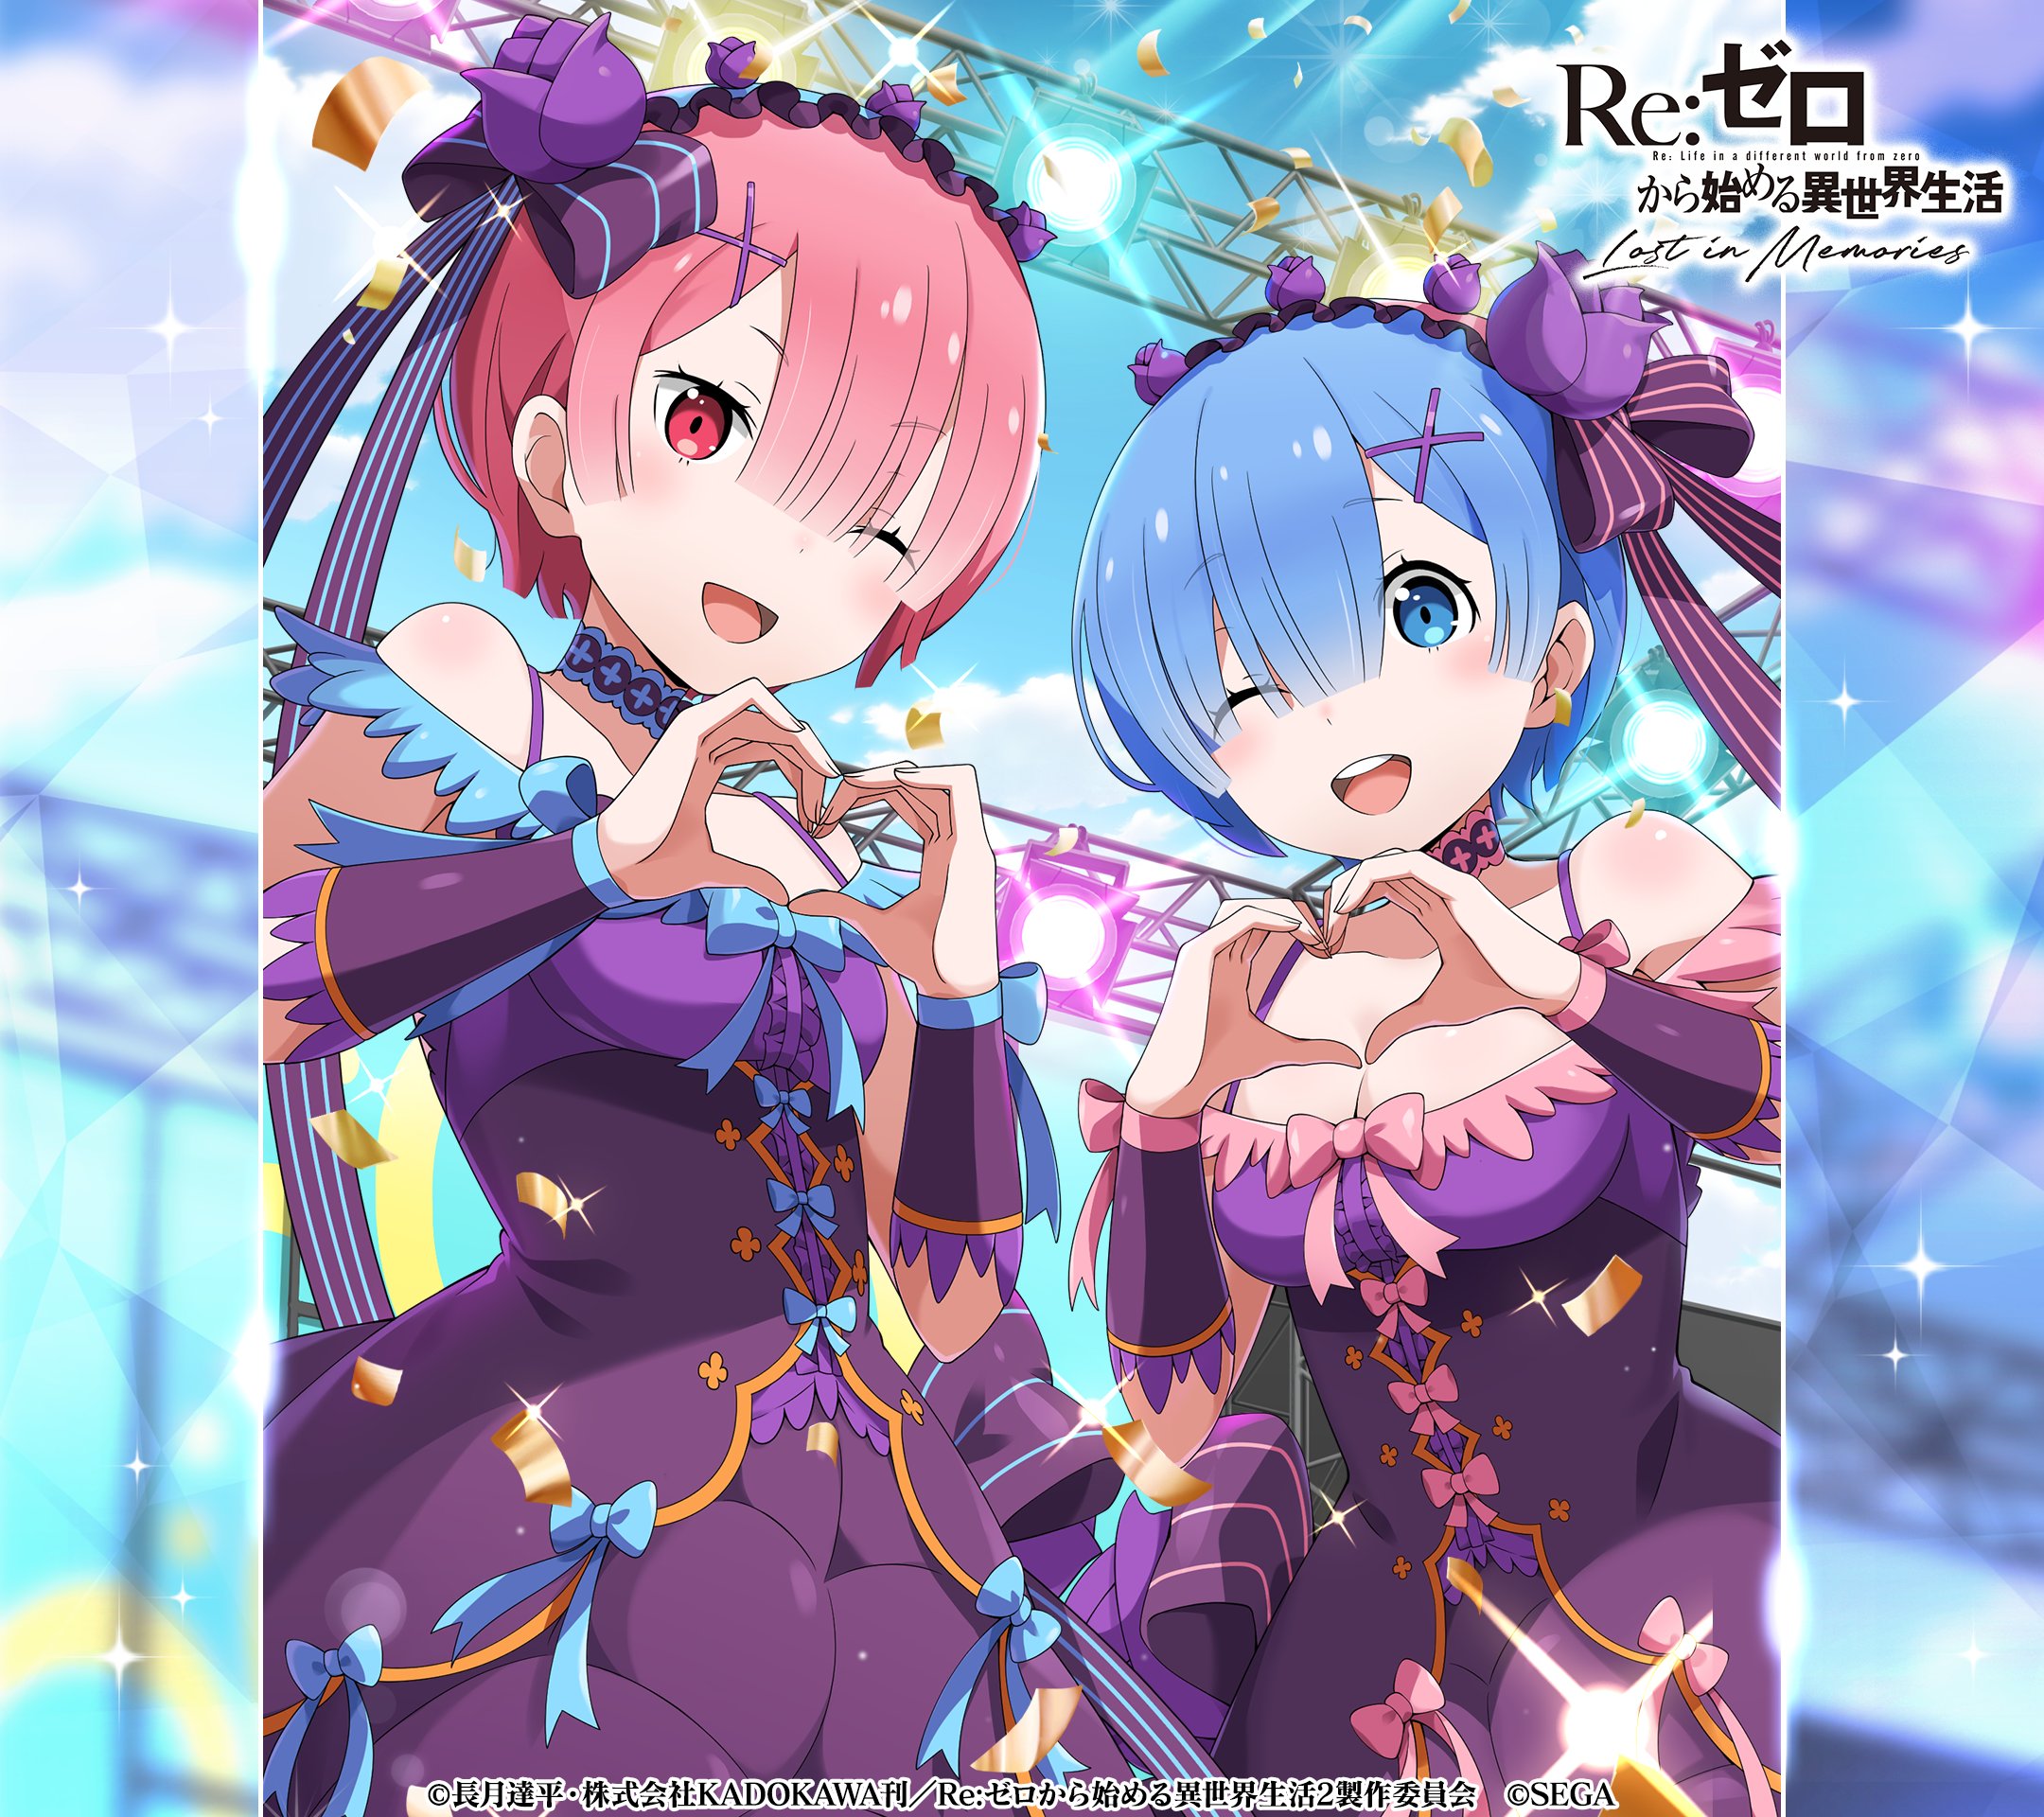 Re ゼロから始める異世界生活 Lost In Memories リゼロス 公式 ルグニカ王国伝令局より ペアキャラ アイドル姉妹 ラム Amp レム 登場記念 リゼロス オリジナル壁紙をプレゼント 壁紙に設定して ぷろでゅーさー 気分に Rezero